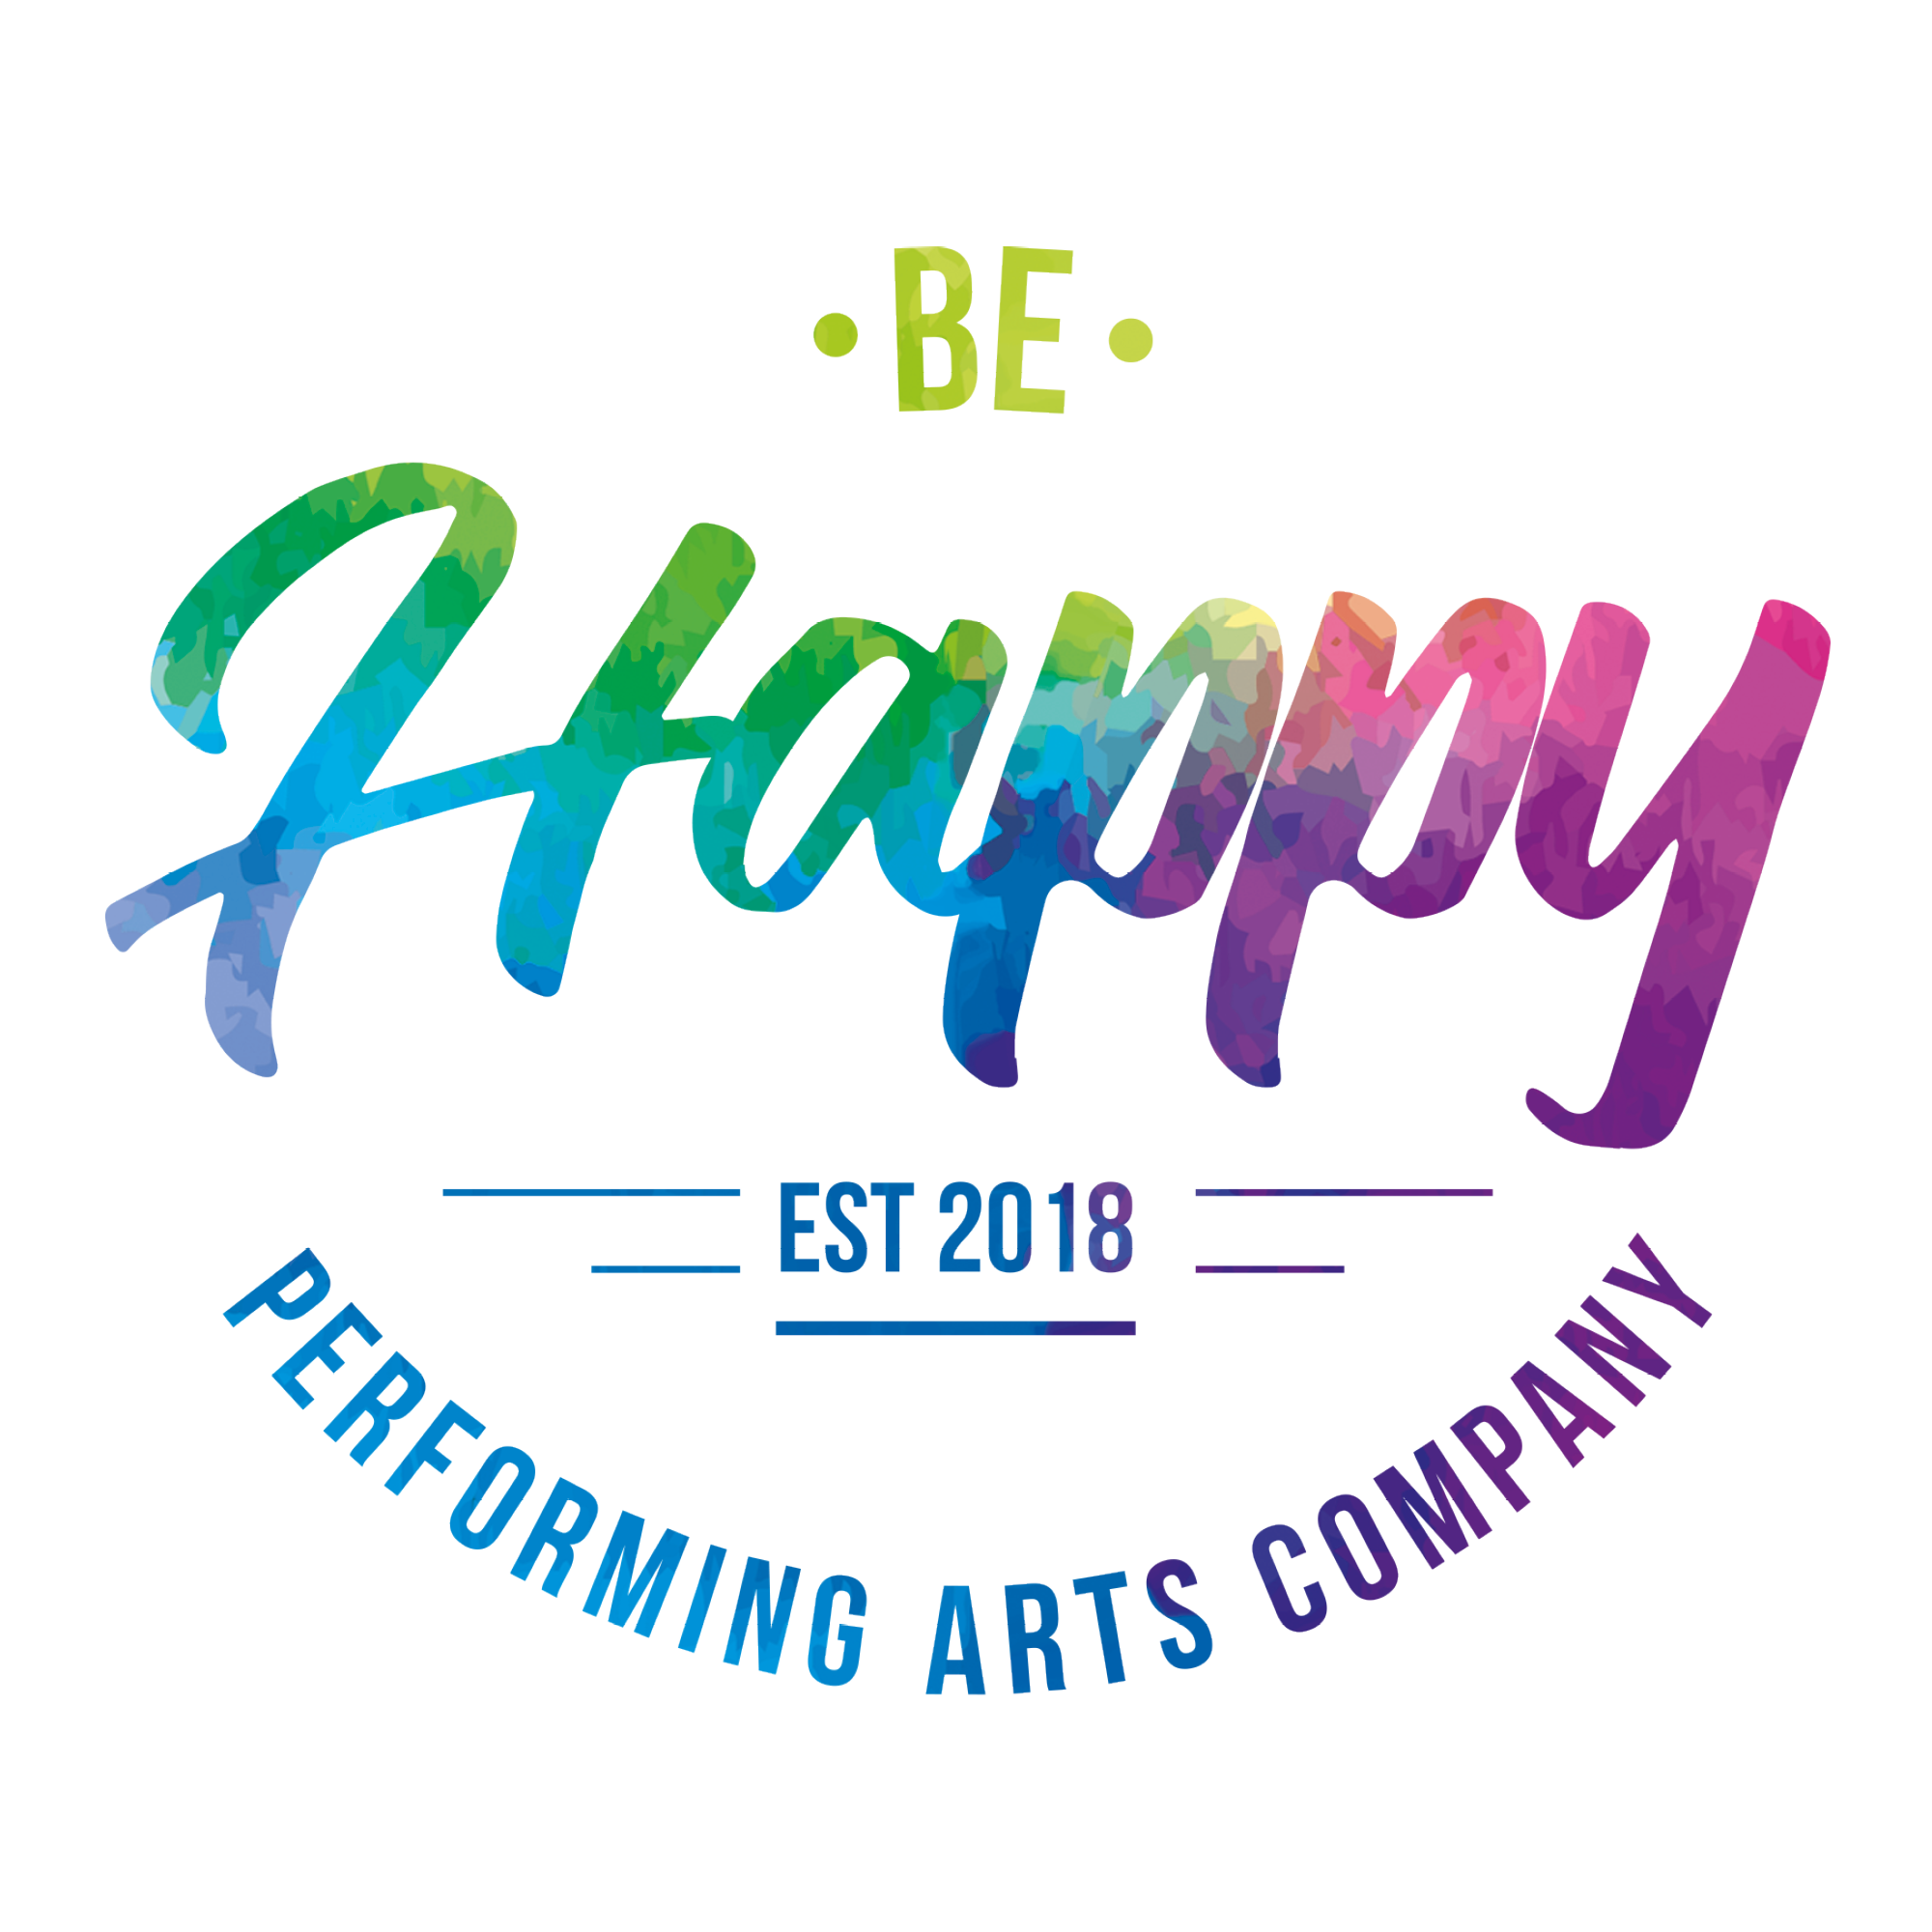 Be Happy Performing Arts Company